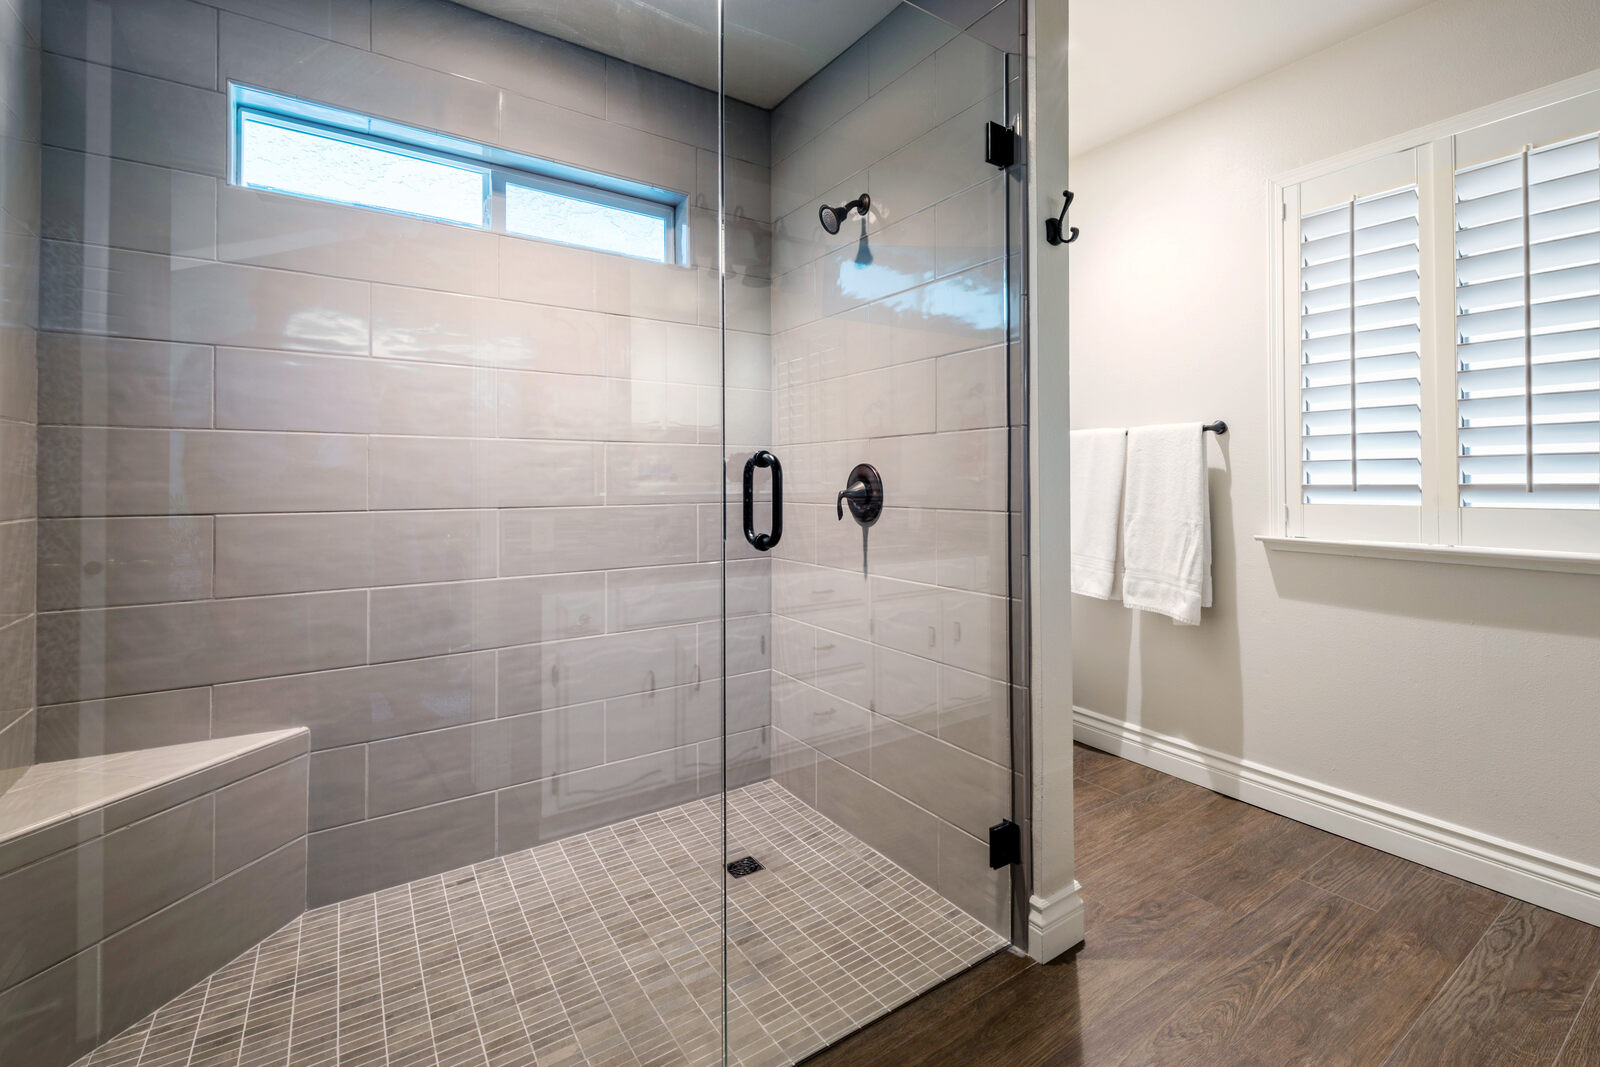 tile walk in shower with sitting ledge in fresno bathroom remodel (1)